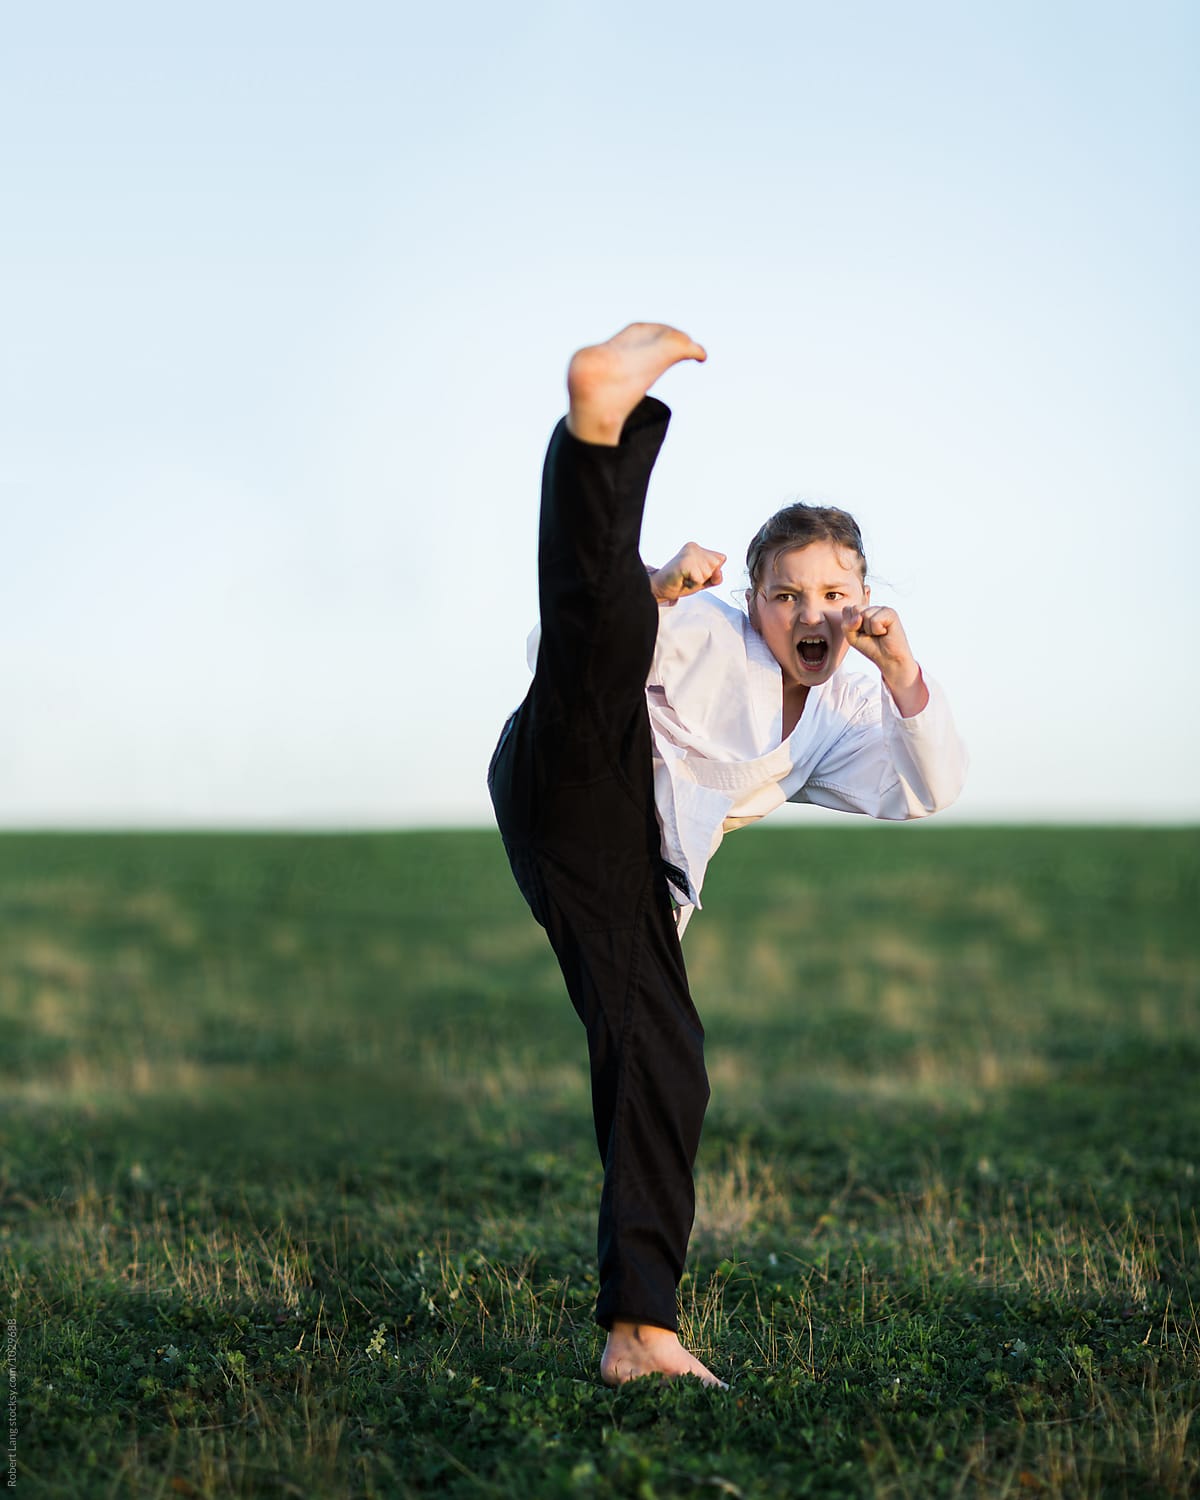 Girl doing martial arts outside on grass